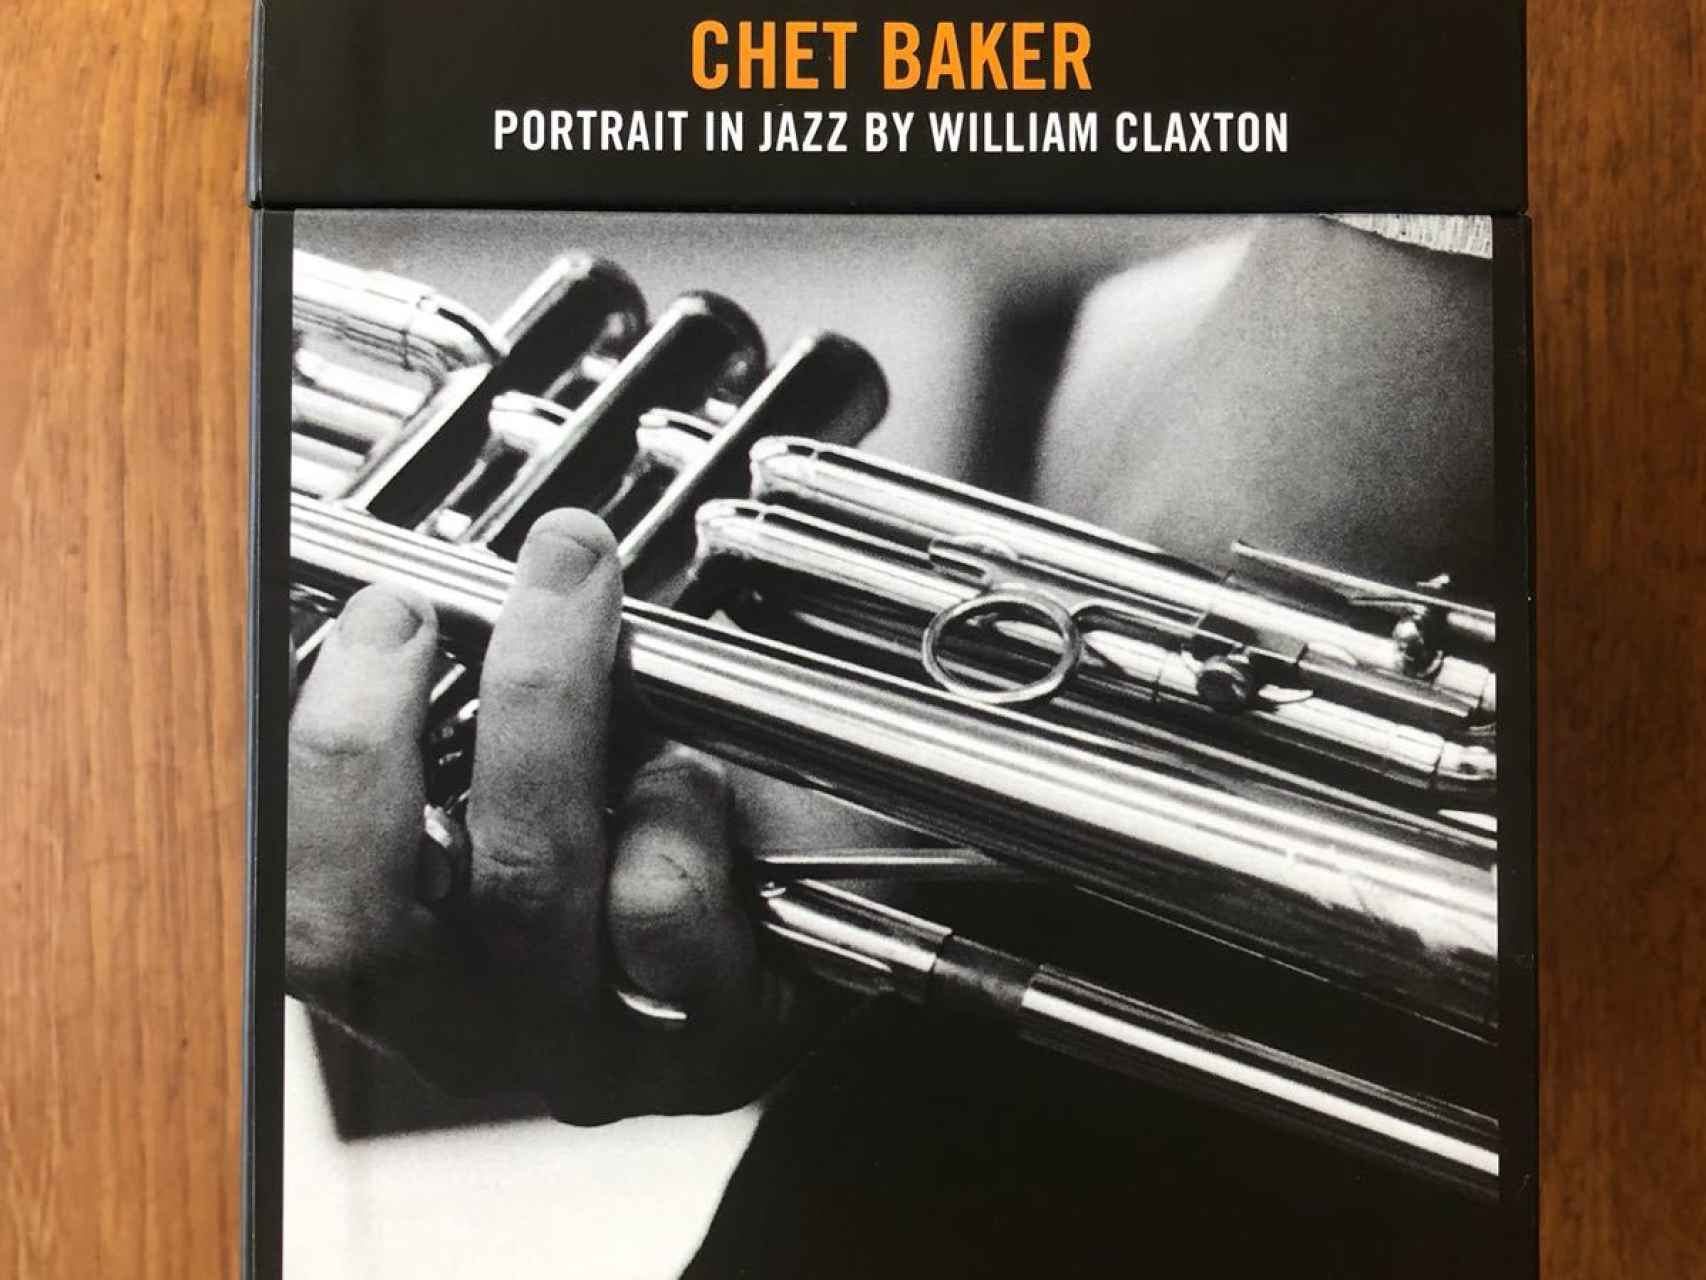 Antologica de Chet Baker fotografiado por William Claxton